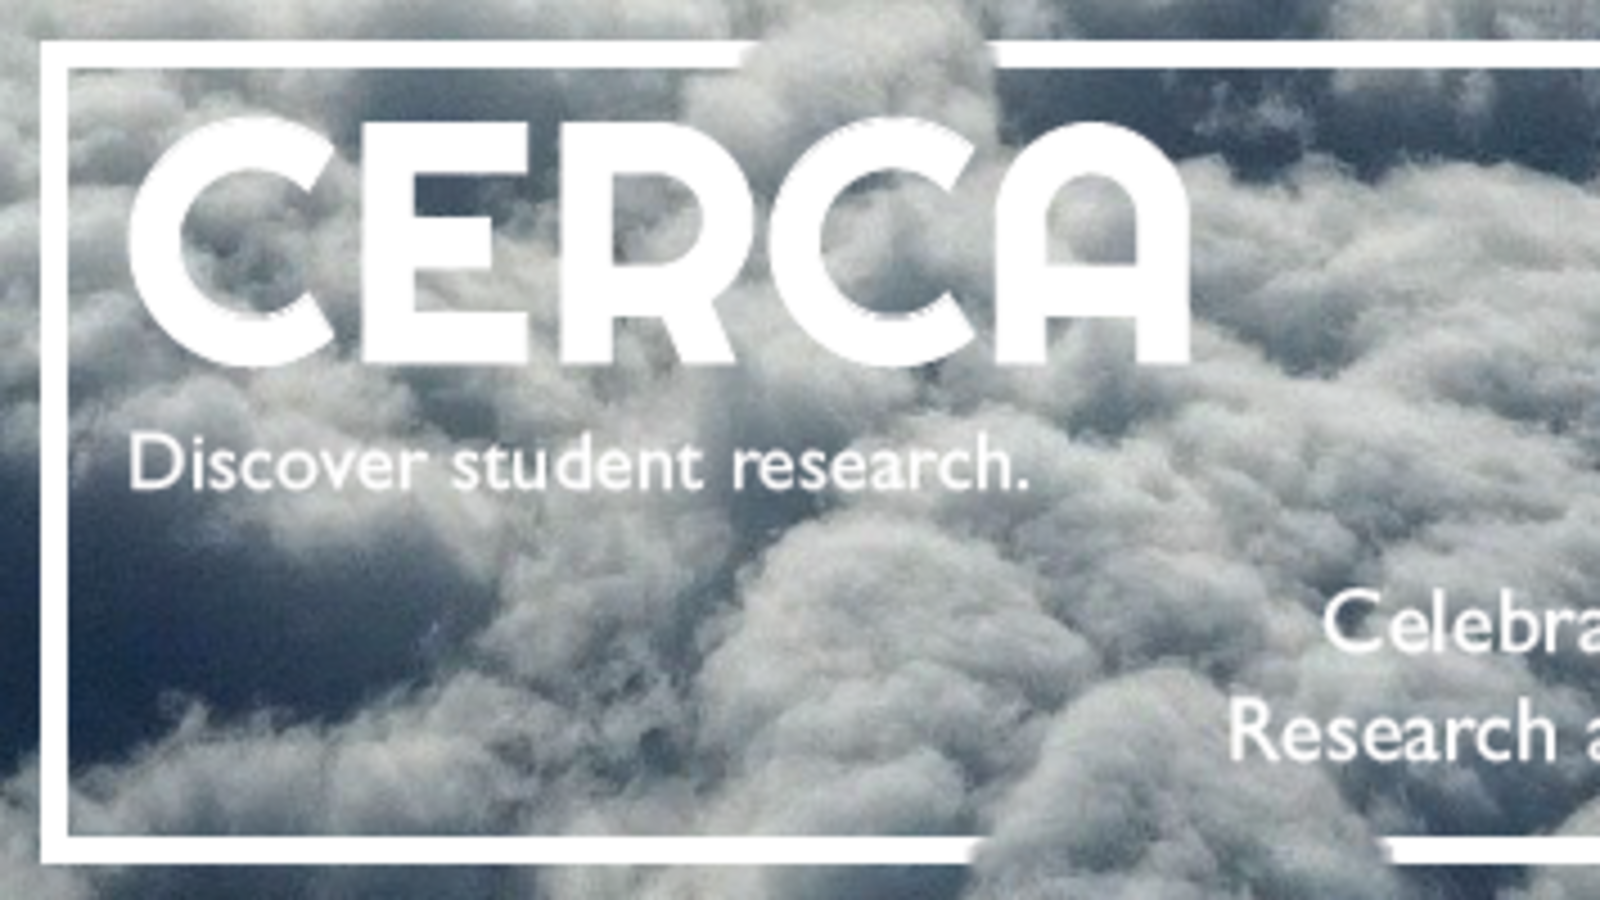 Clouds - CERCA Discover Research